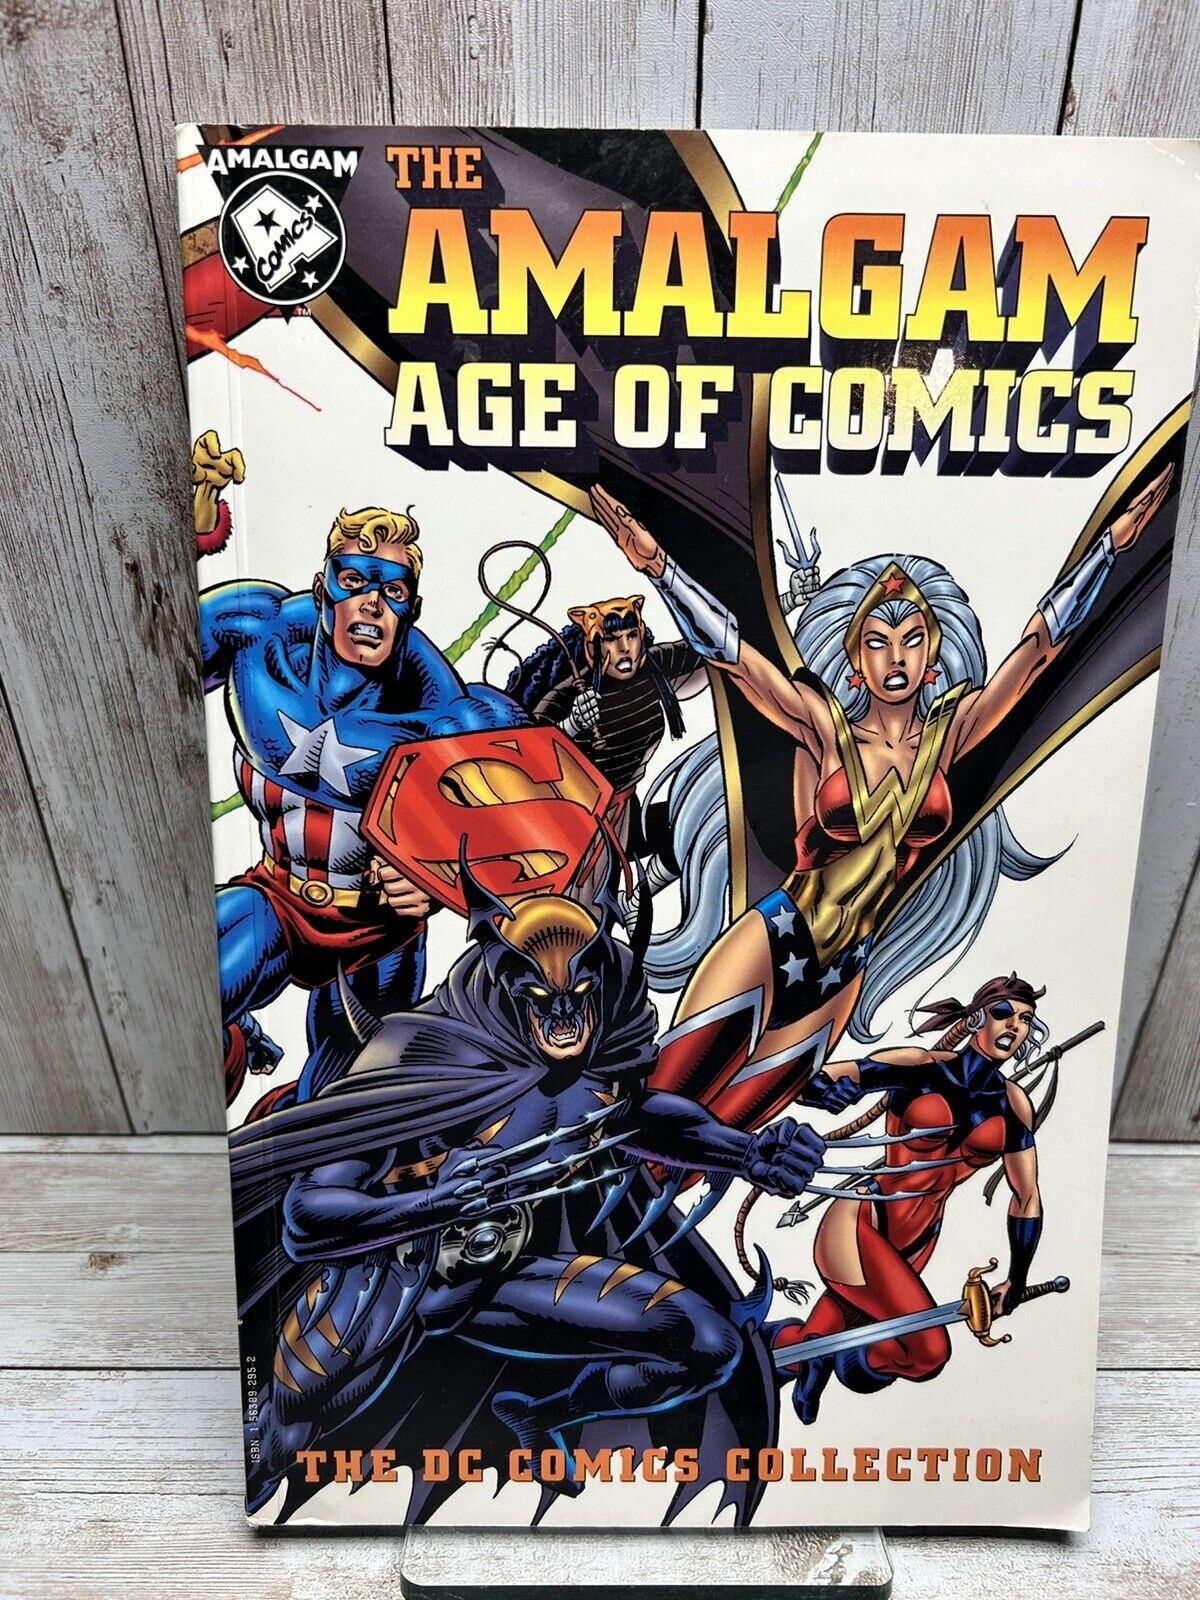 The Amalgam Age of Comics: The DC Comics Collection #1 1996